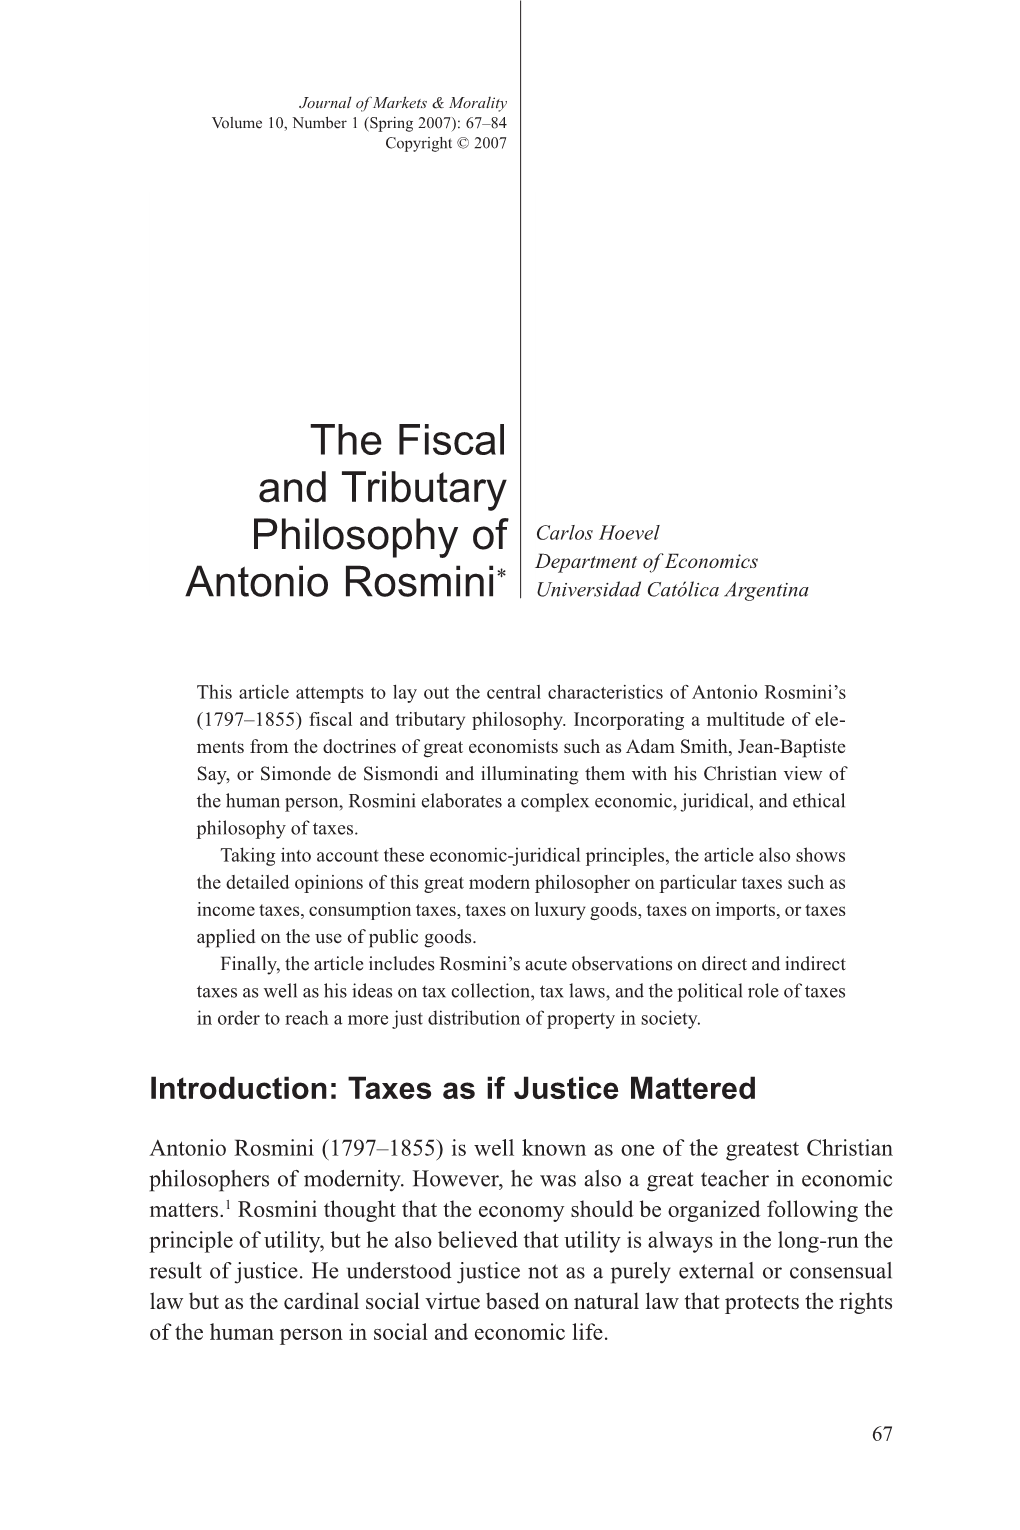 The Fiscal and Tributary Philosophy of Antonio Rosmini*